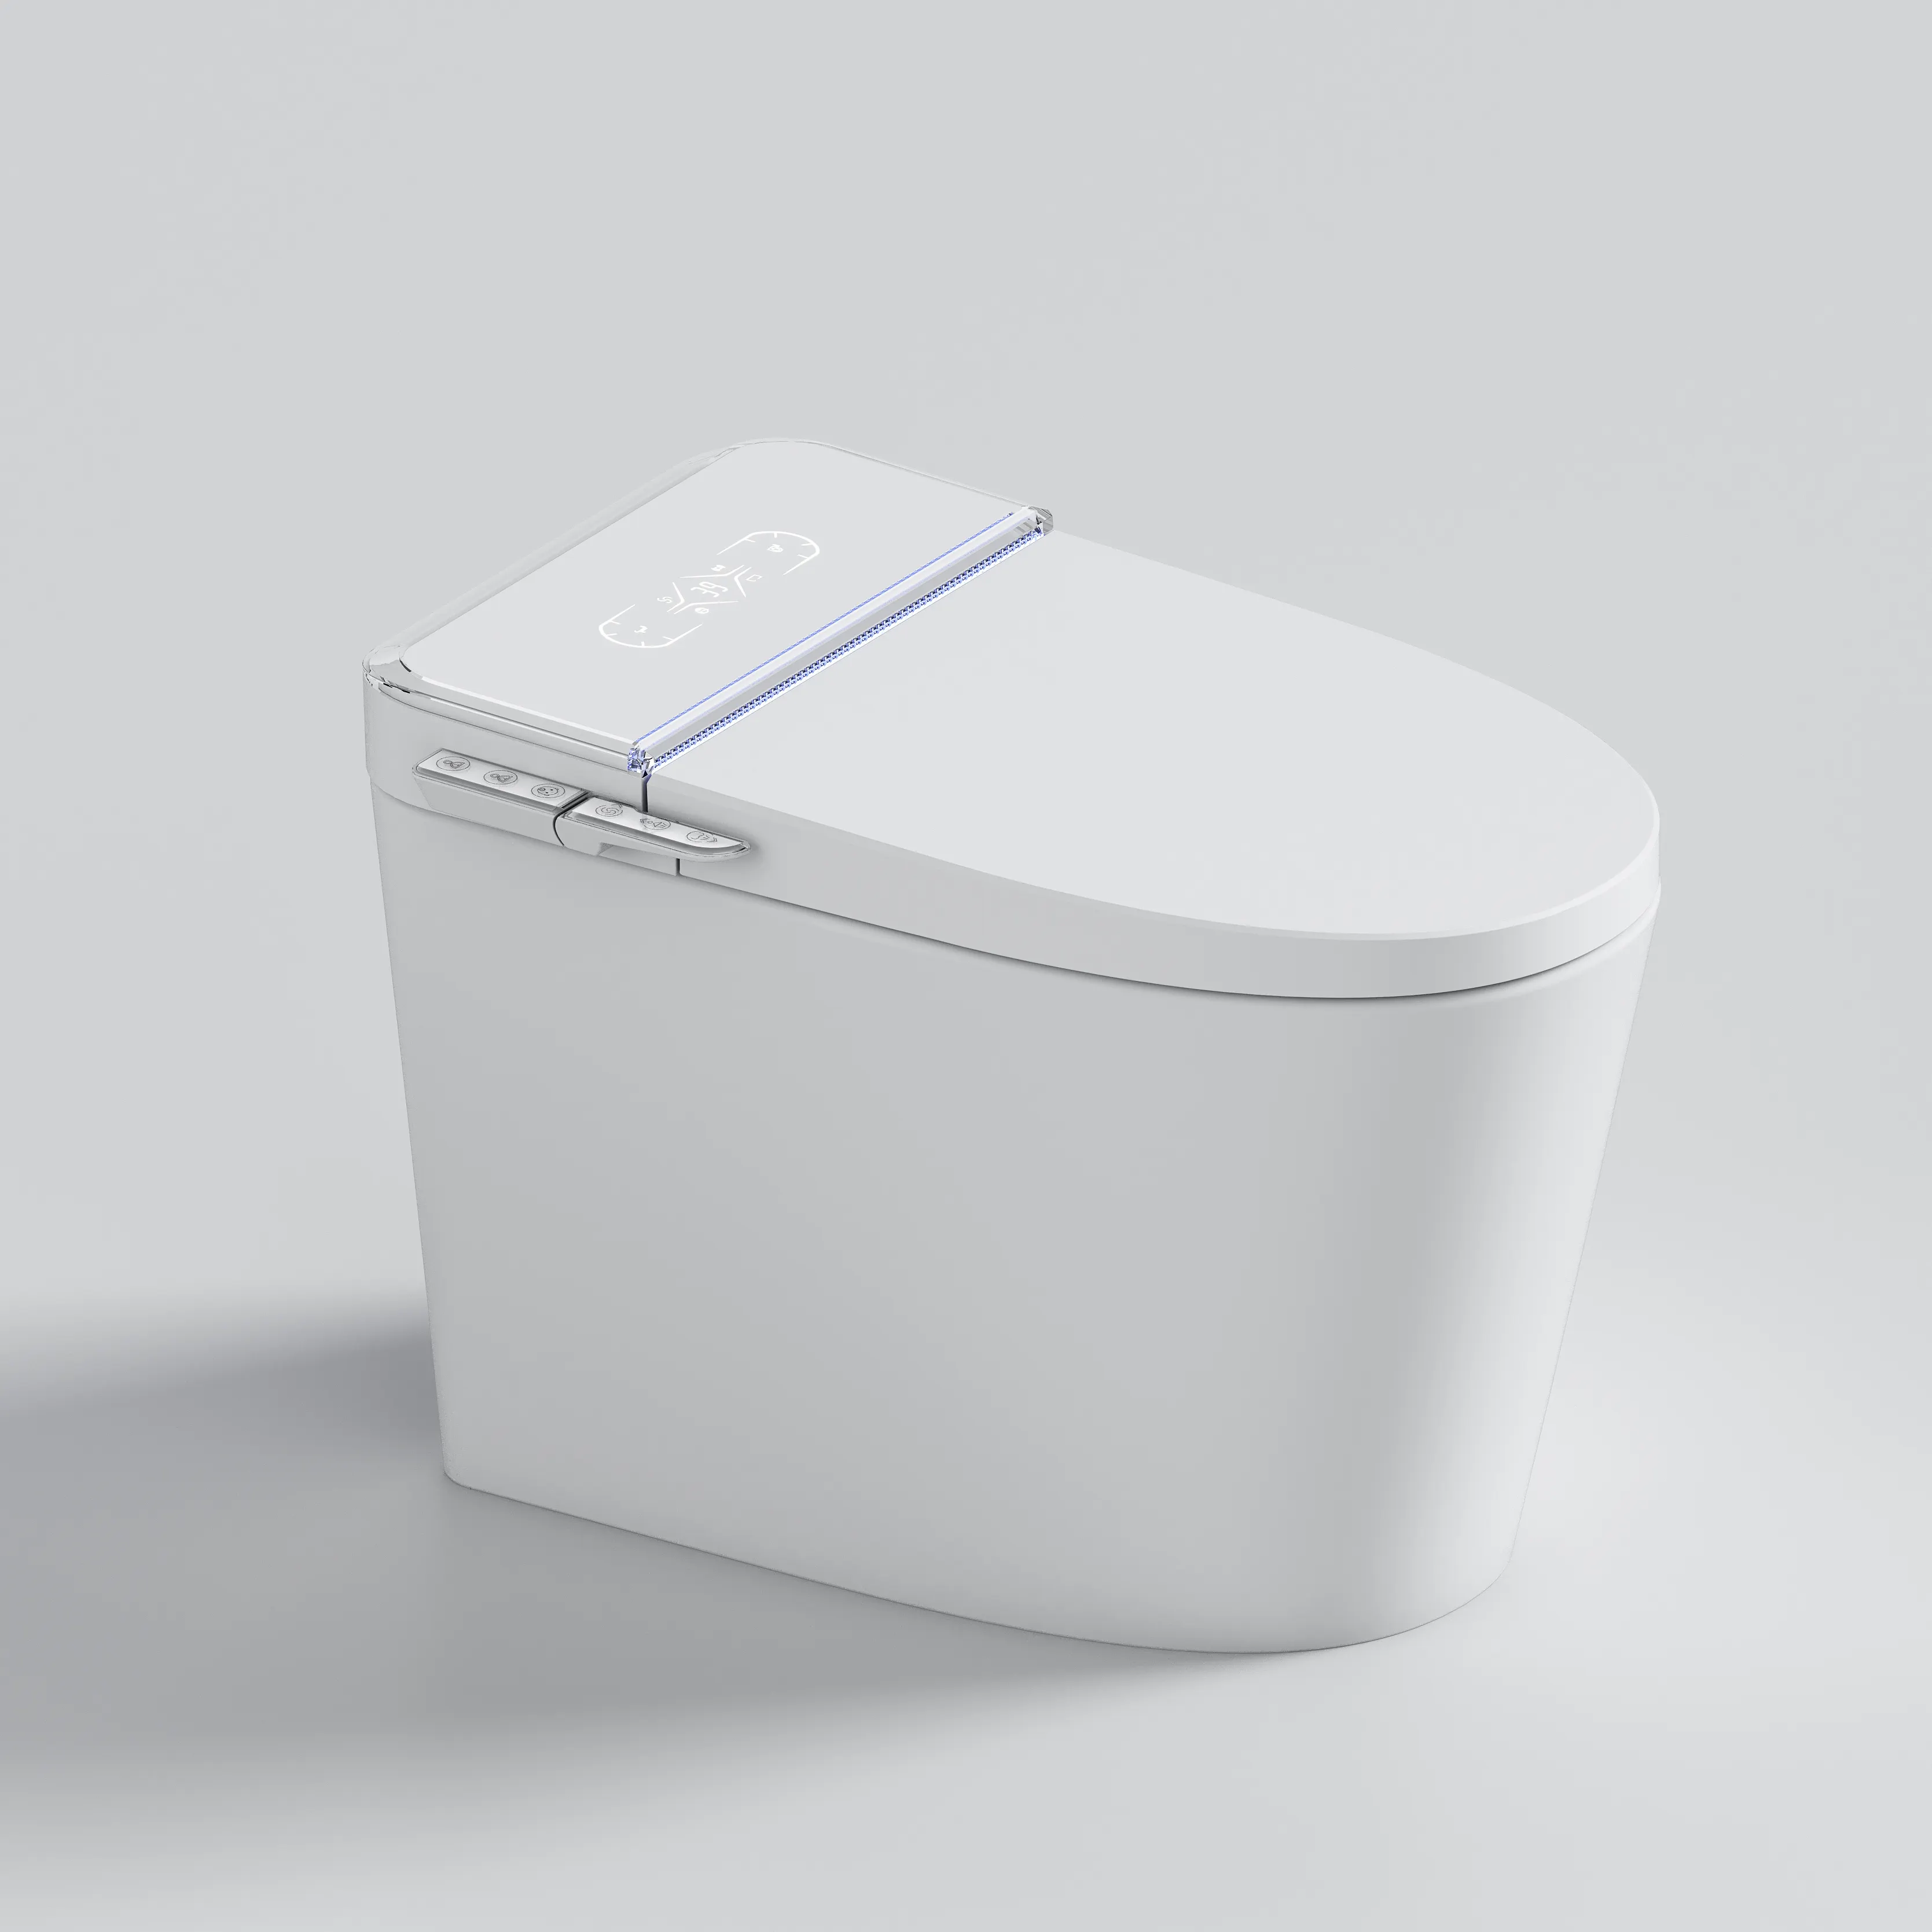 Grosir fungsi Uv kamar mandi keramik otomatis lemari air Toilet cerdas Wc cerdas